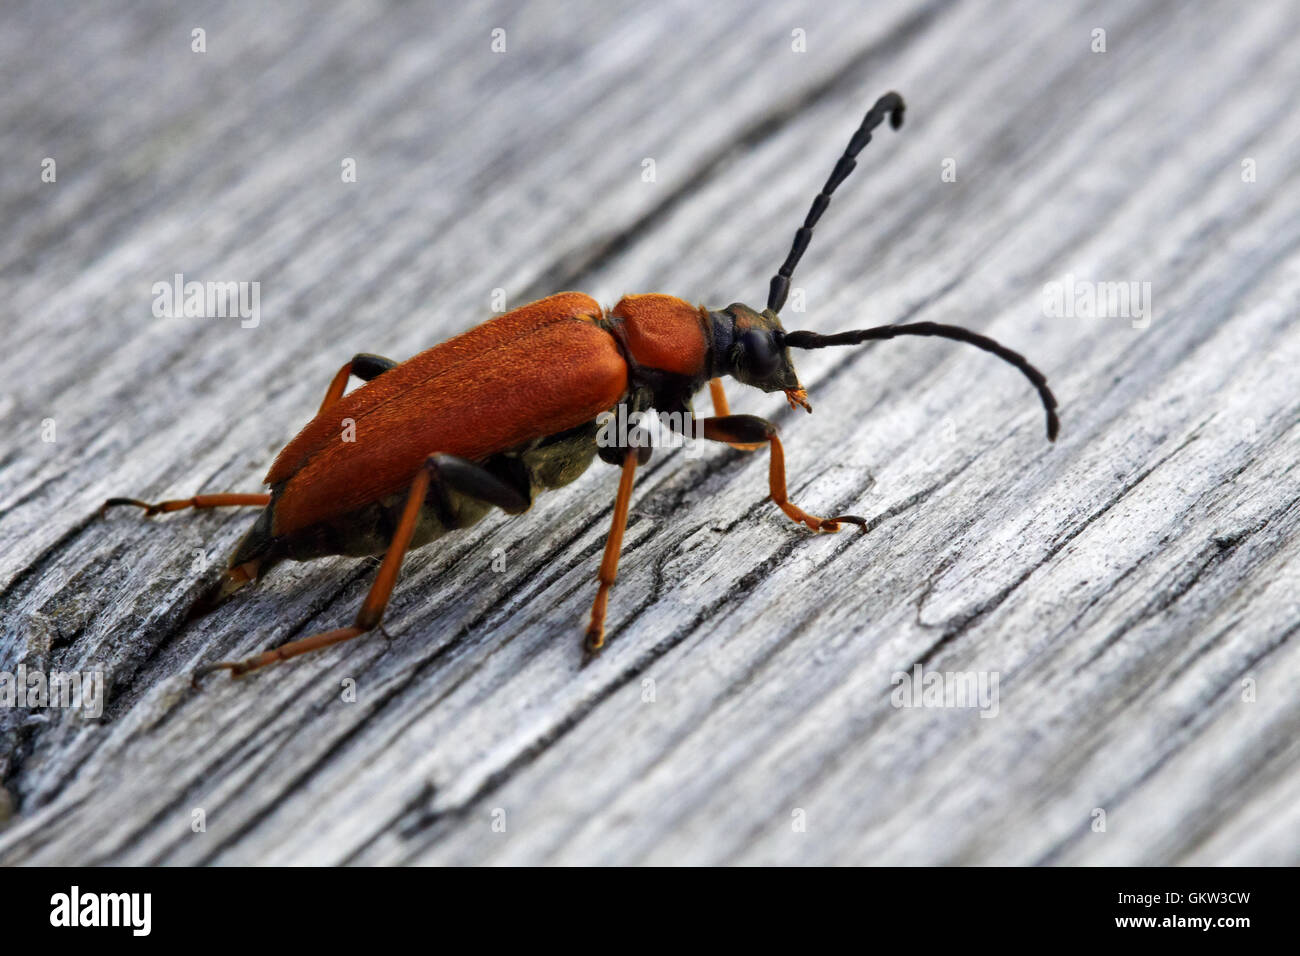 Anoplodera rubra, rosso-marrone di Longhorn Beetle deposizione delle uova Foto Stock